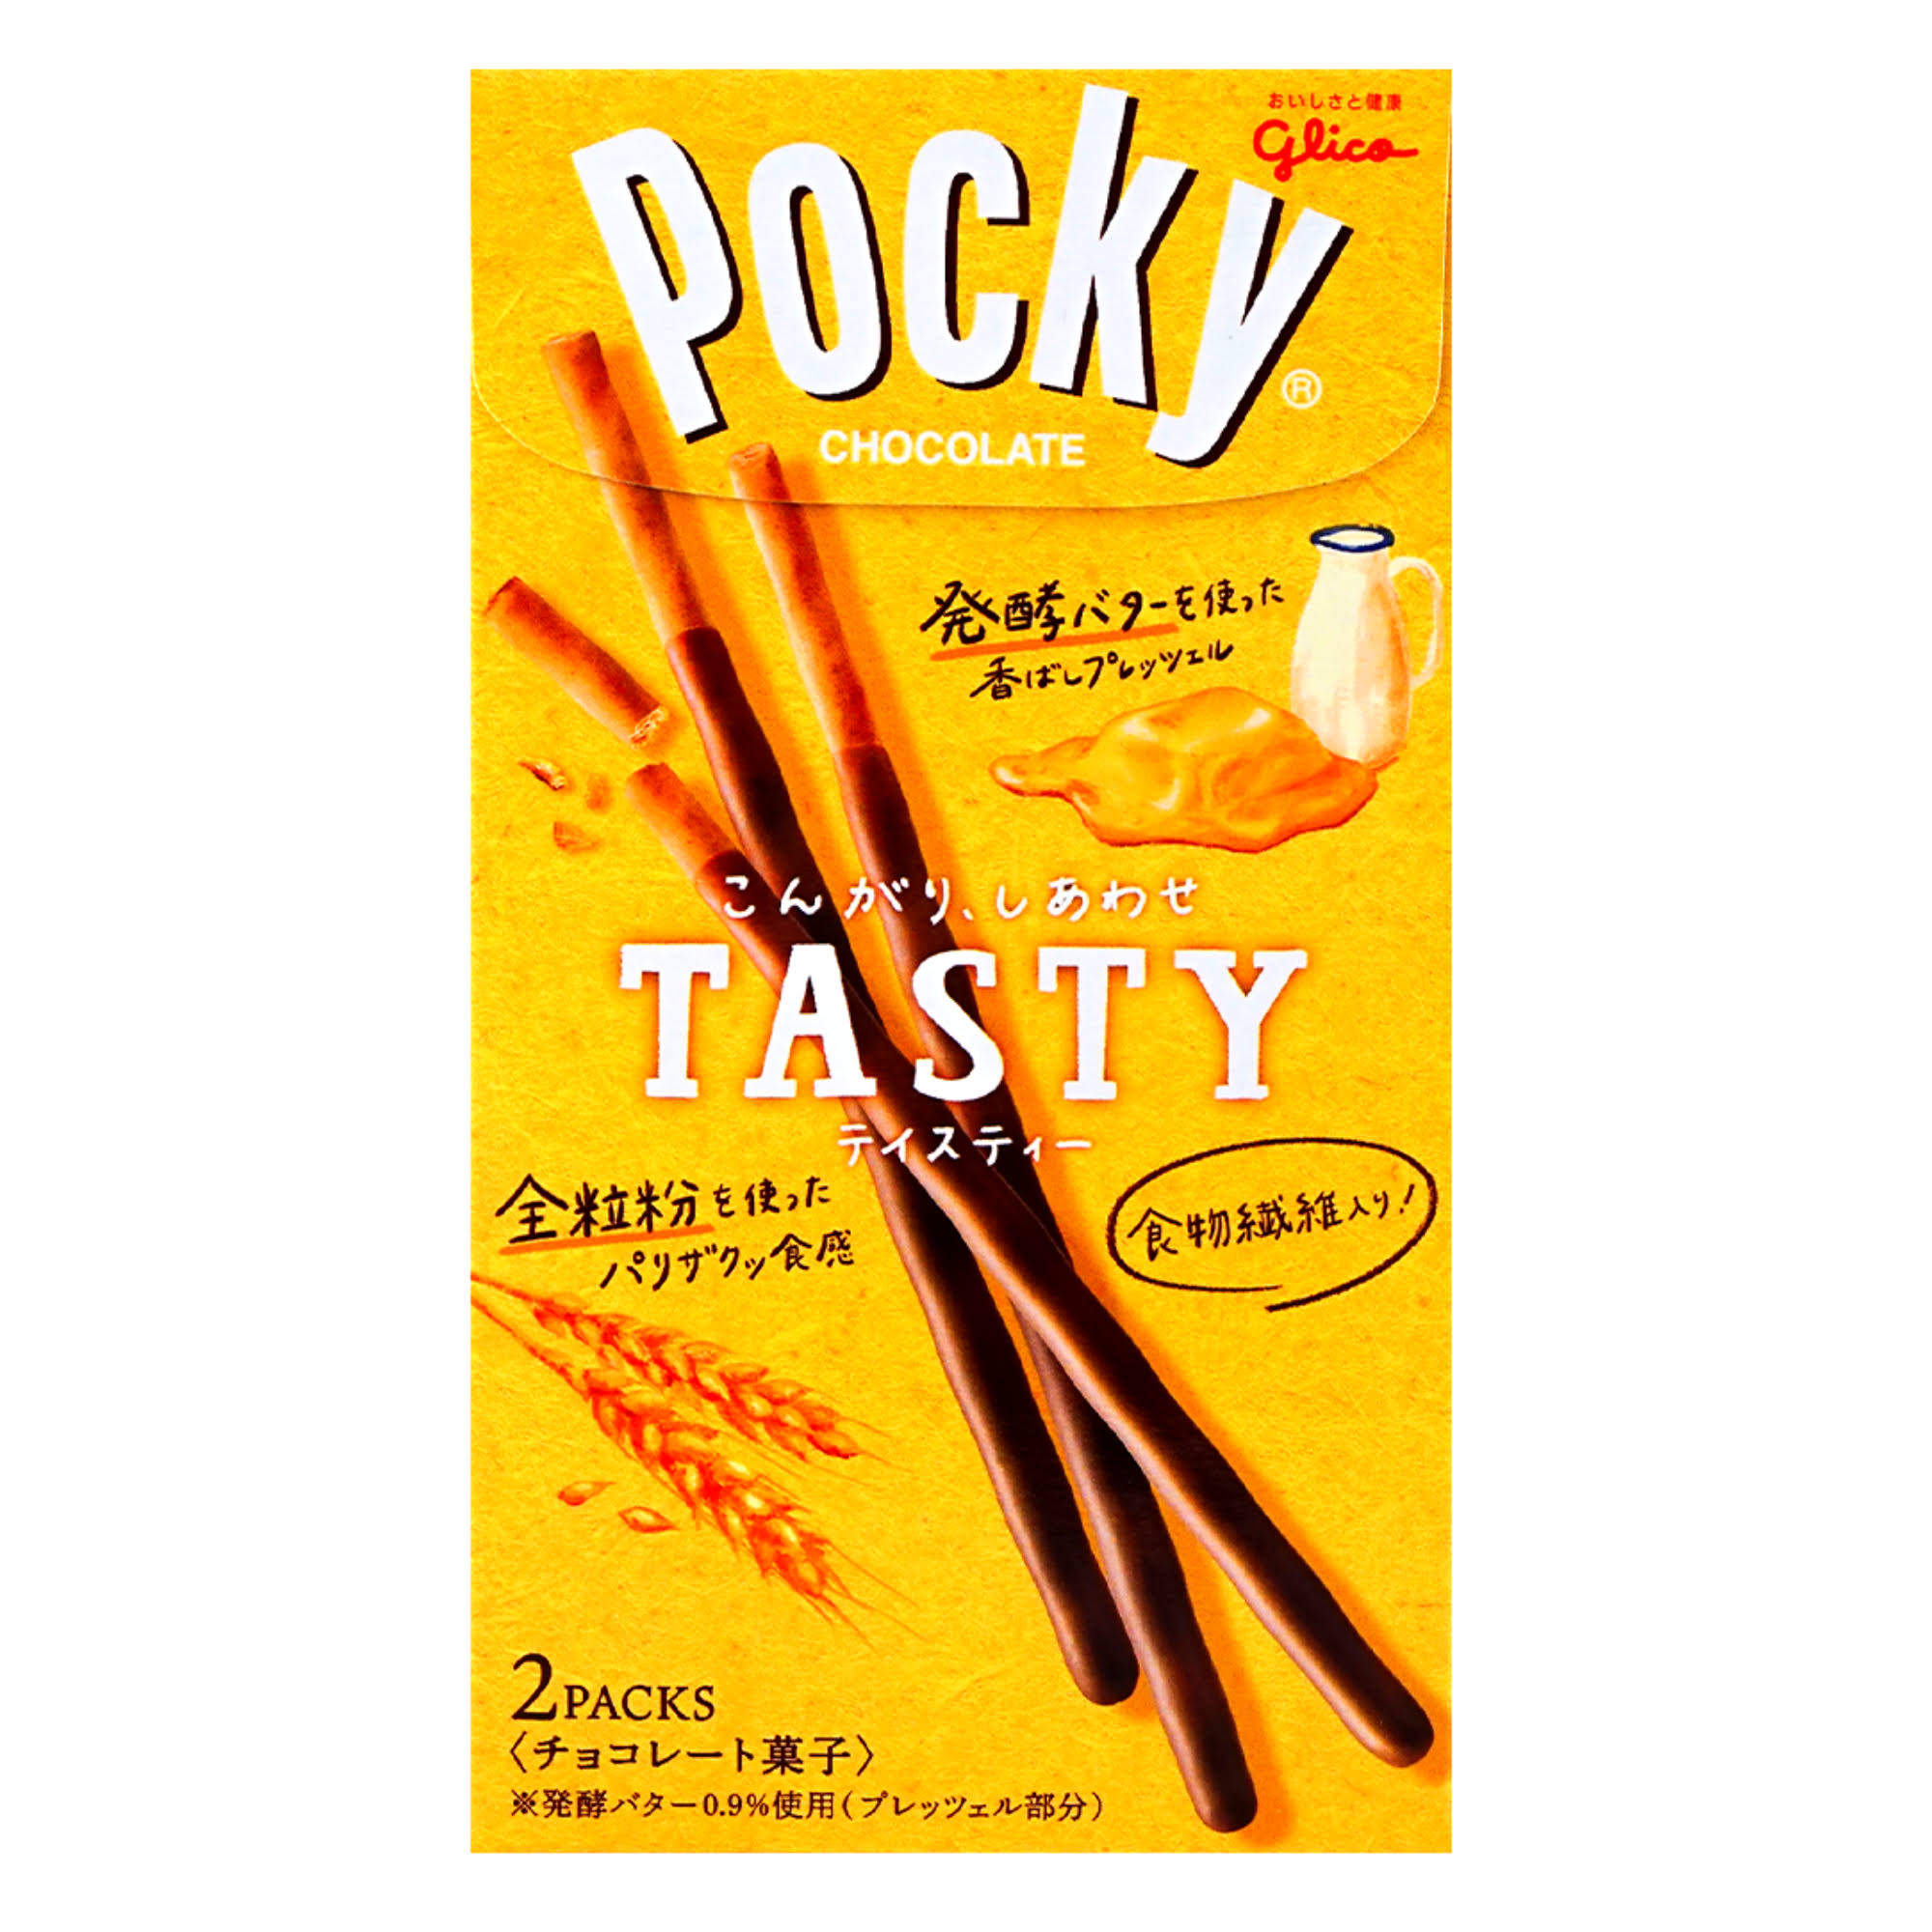 Glico Pocky - Tasty (JP) 72g